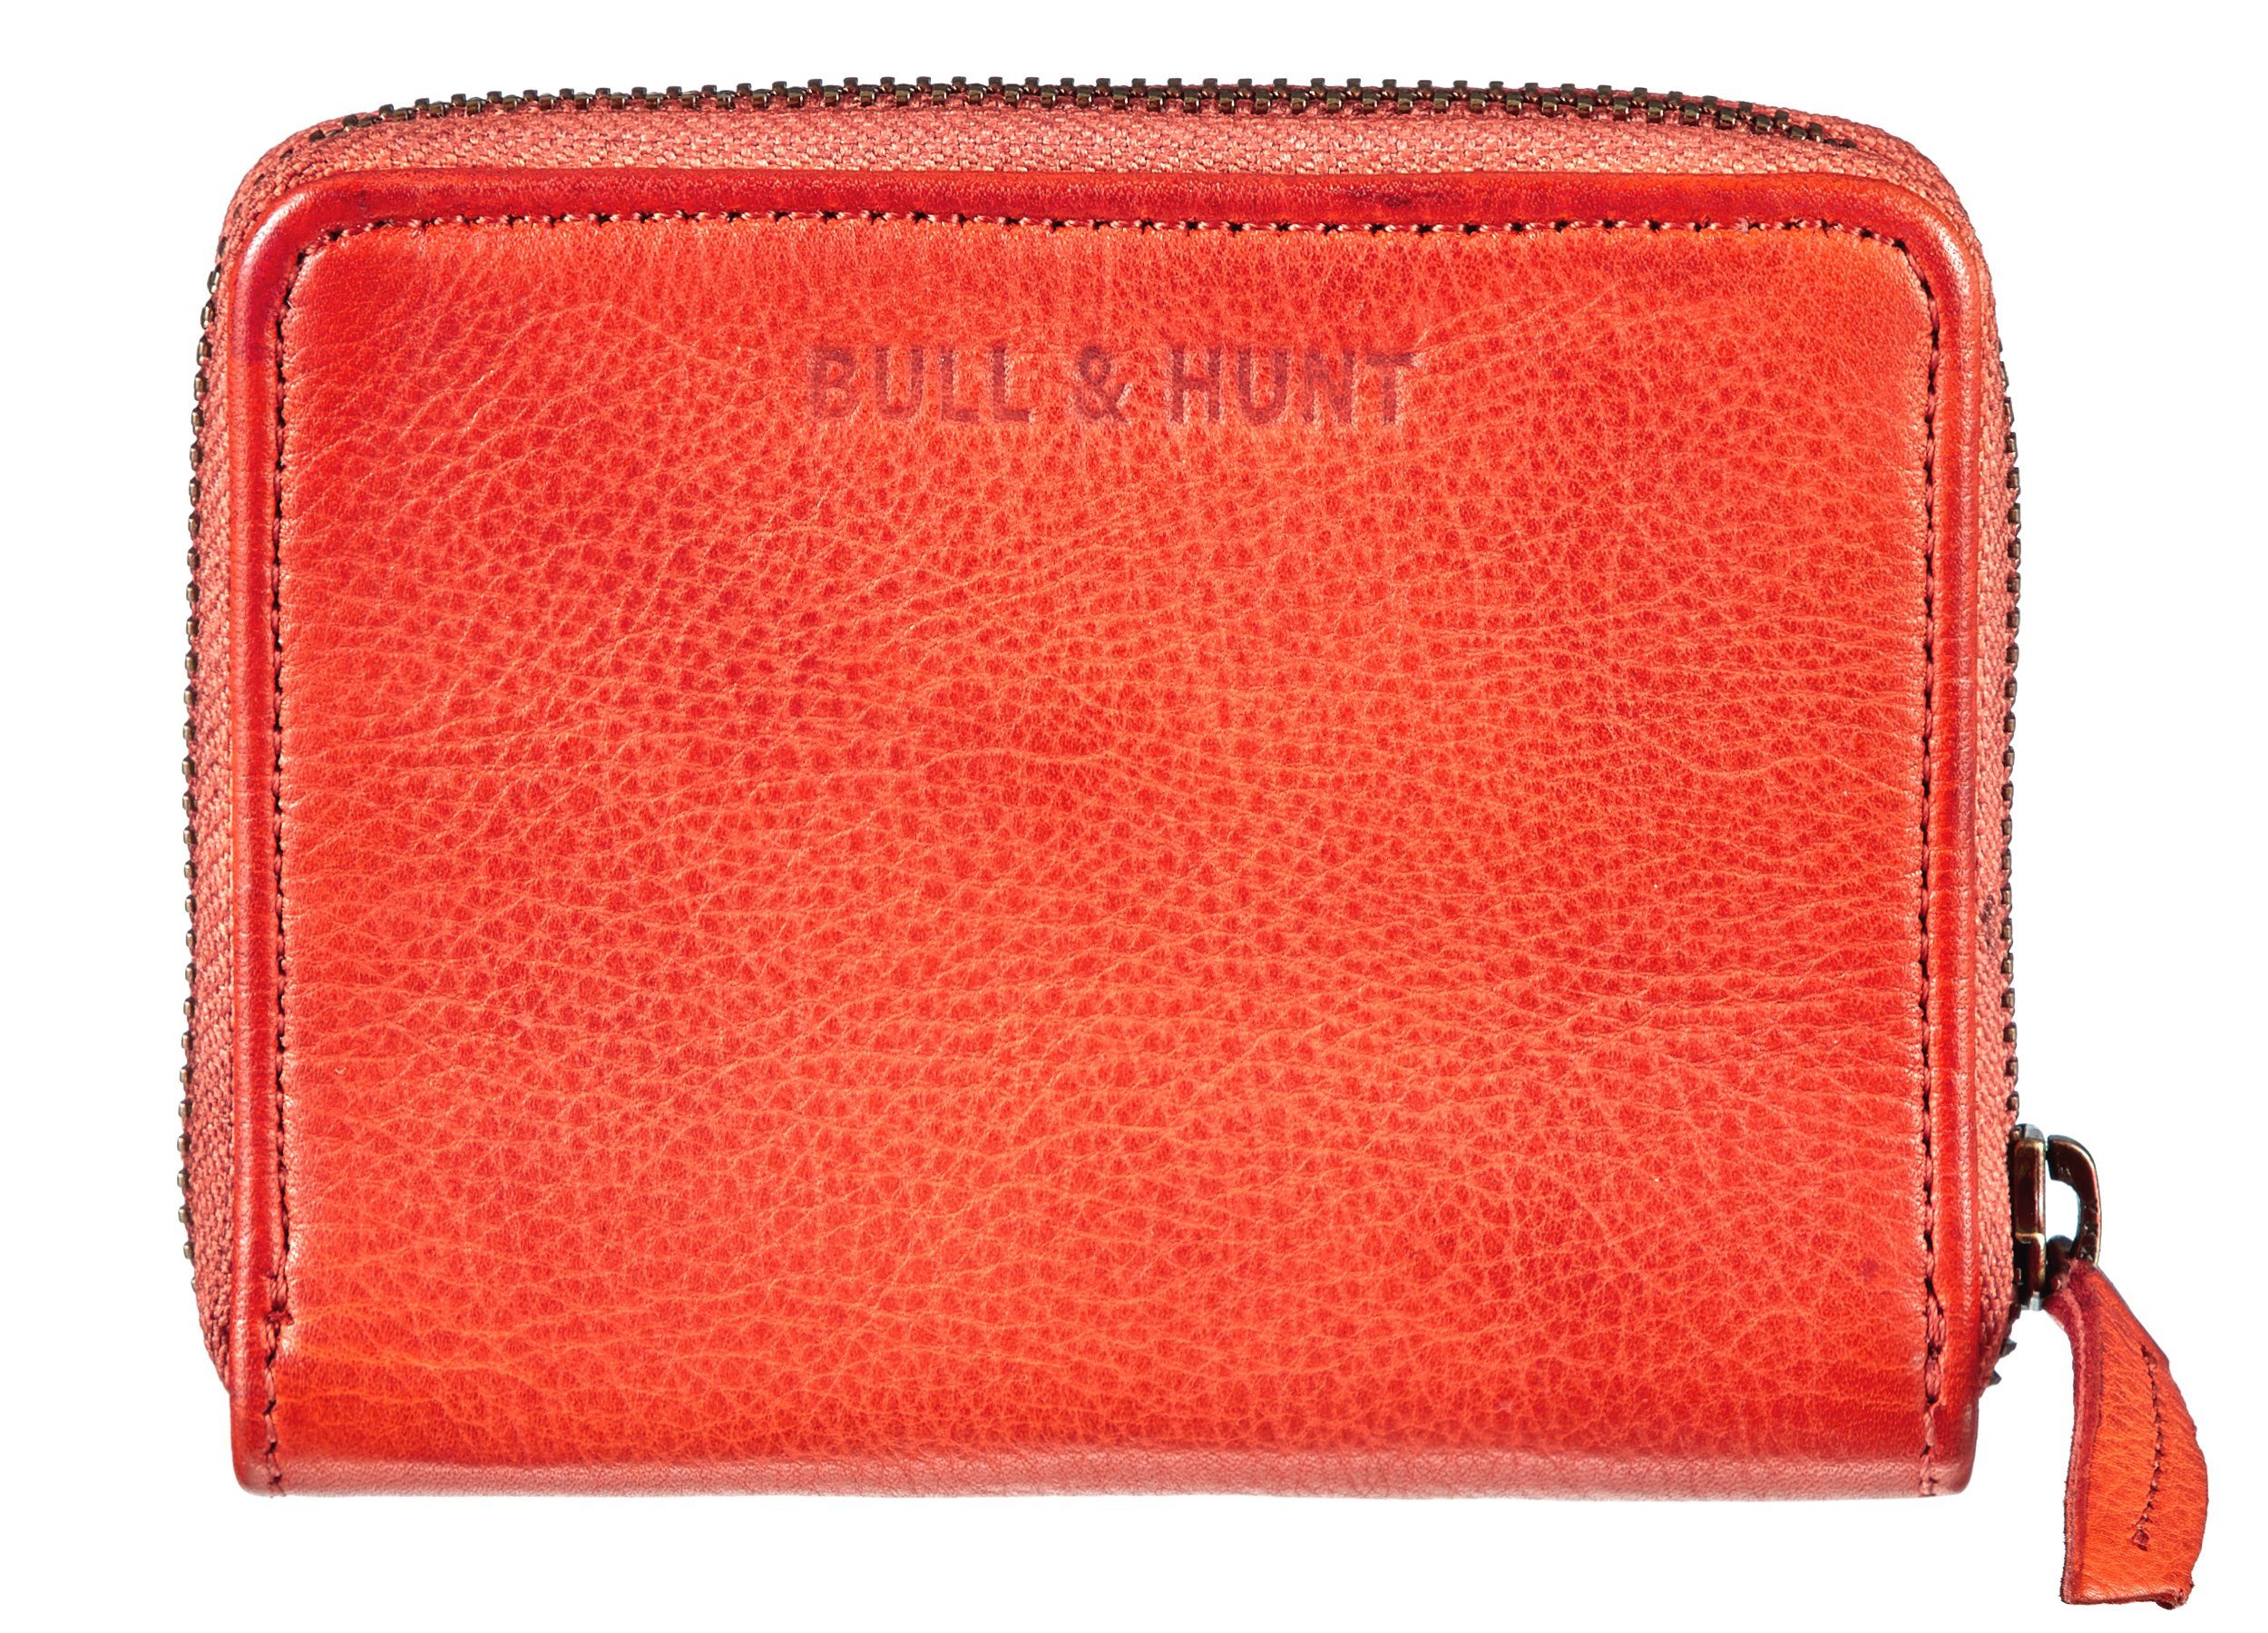 Hunt Geldbörse Bull & midi orange zip wallet